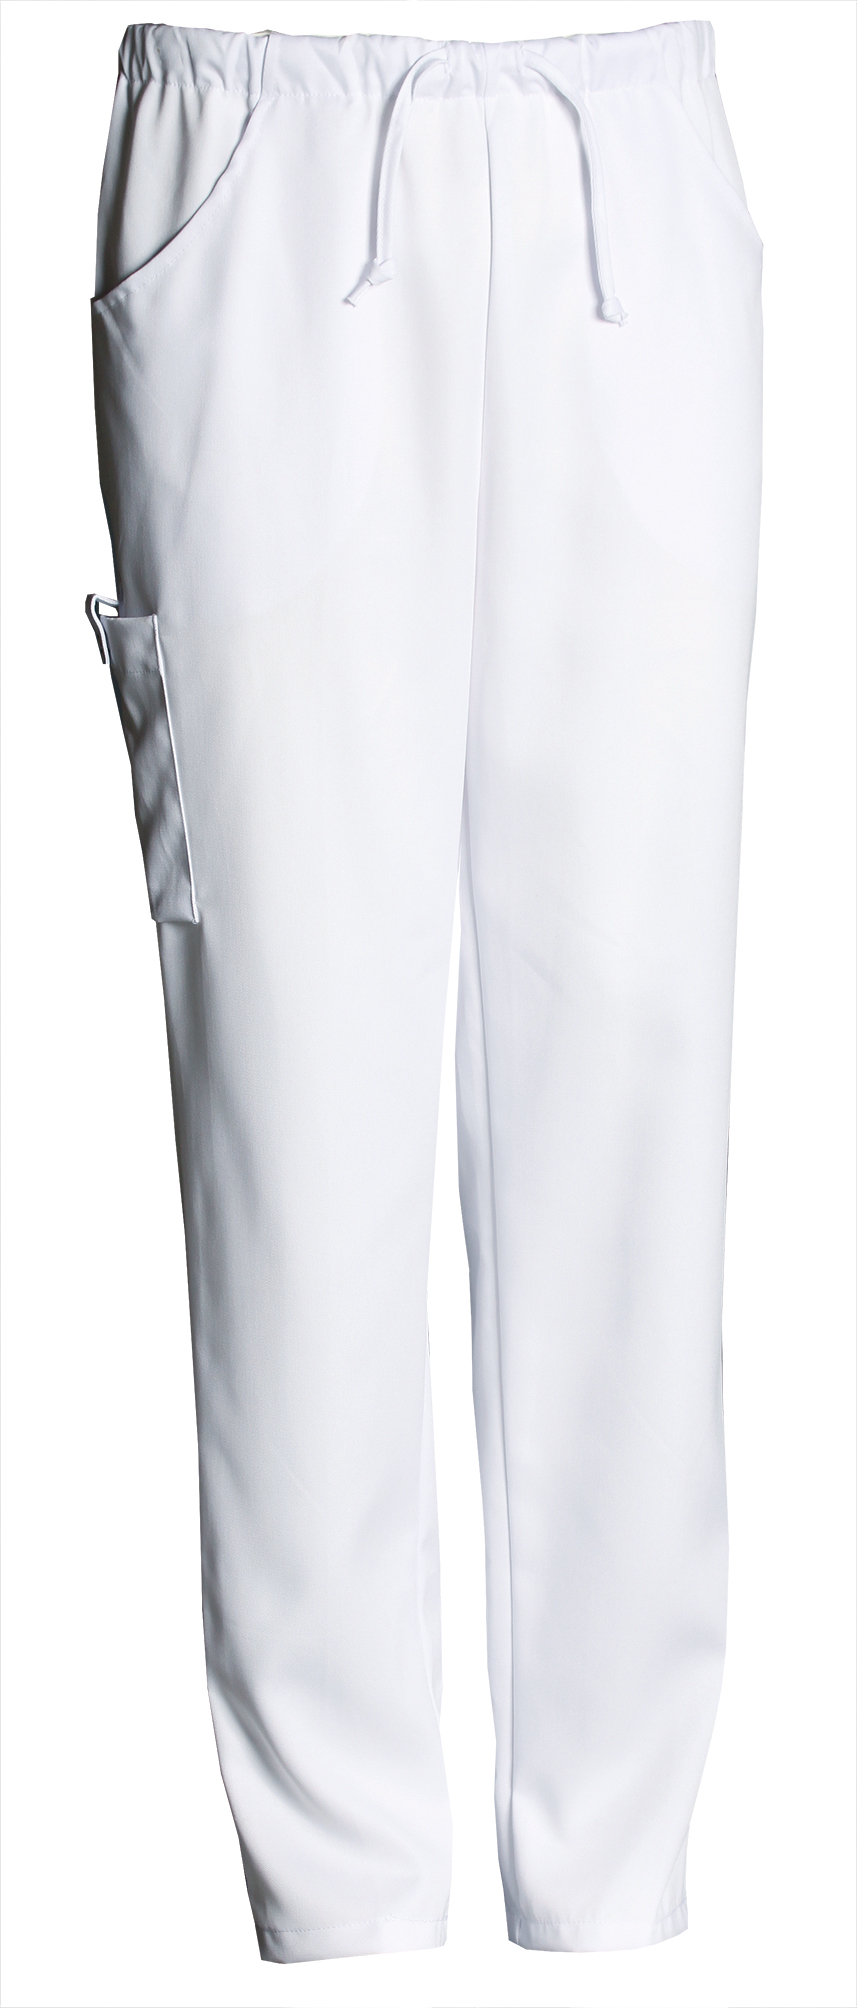 Unisex pants in sustainable fabric, TENCEL®, Charisma Premium (1051251)